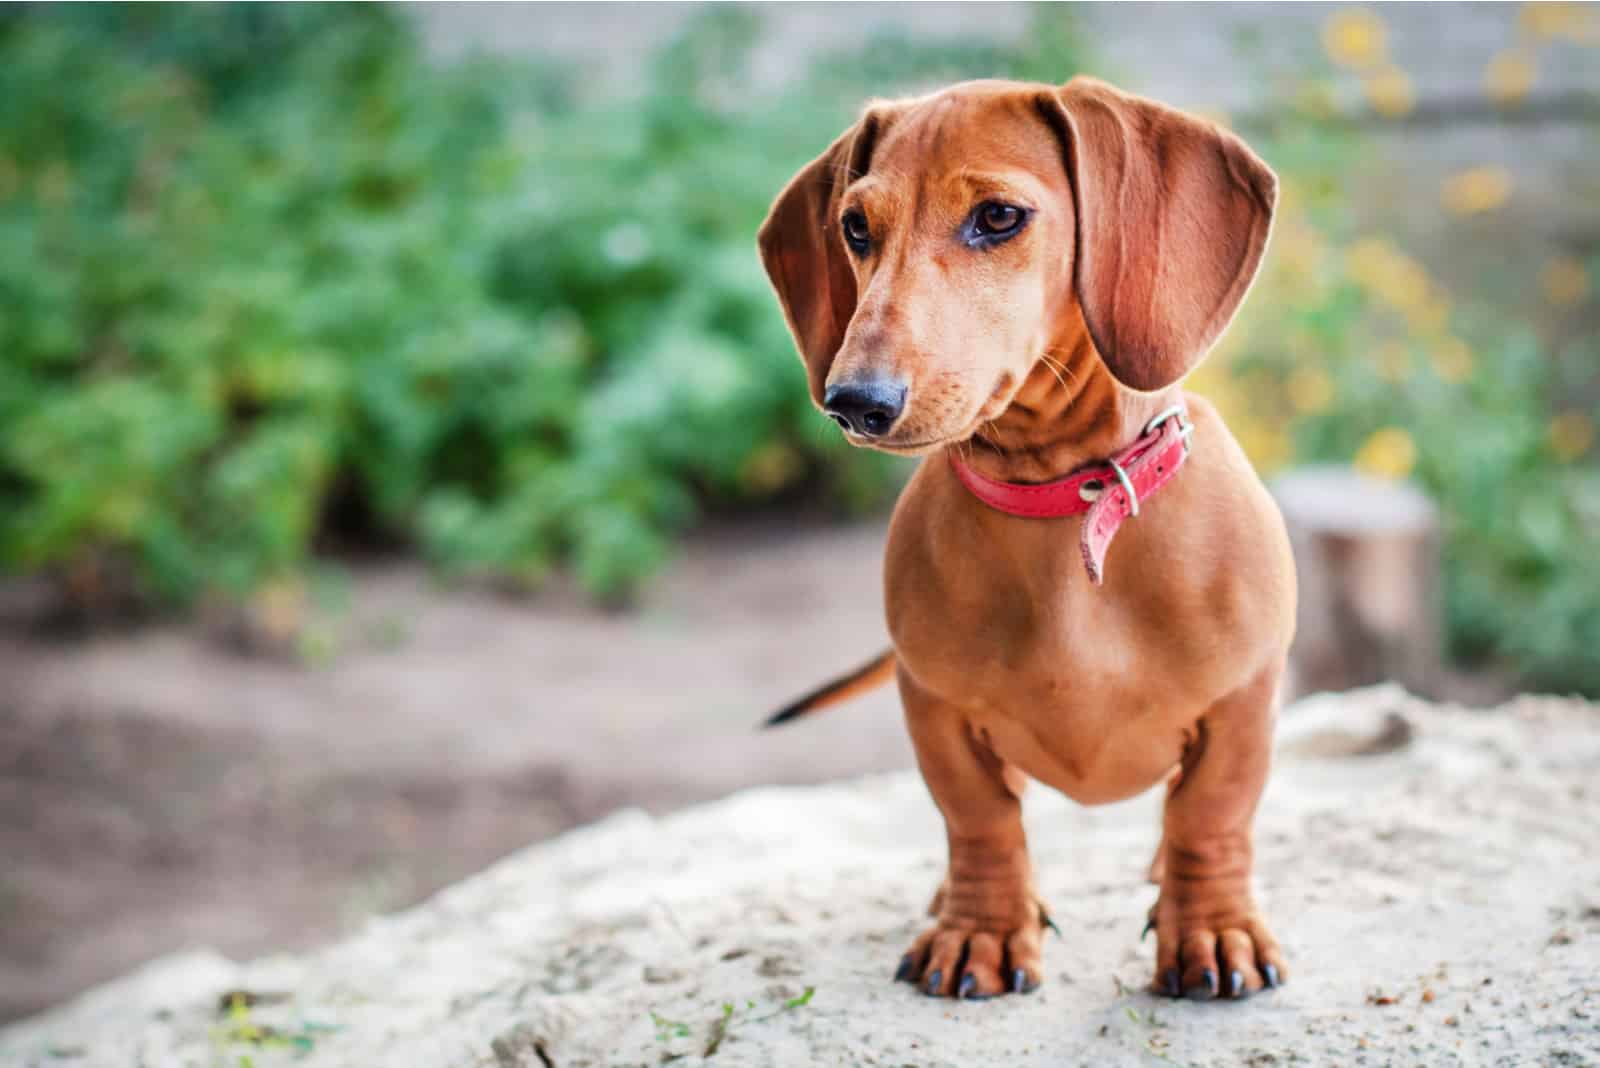 dachshund imagined sitting on a stone